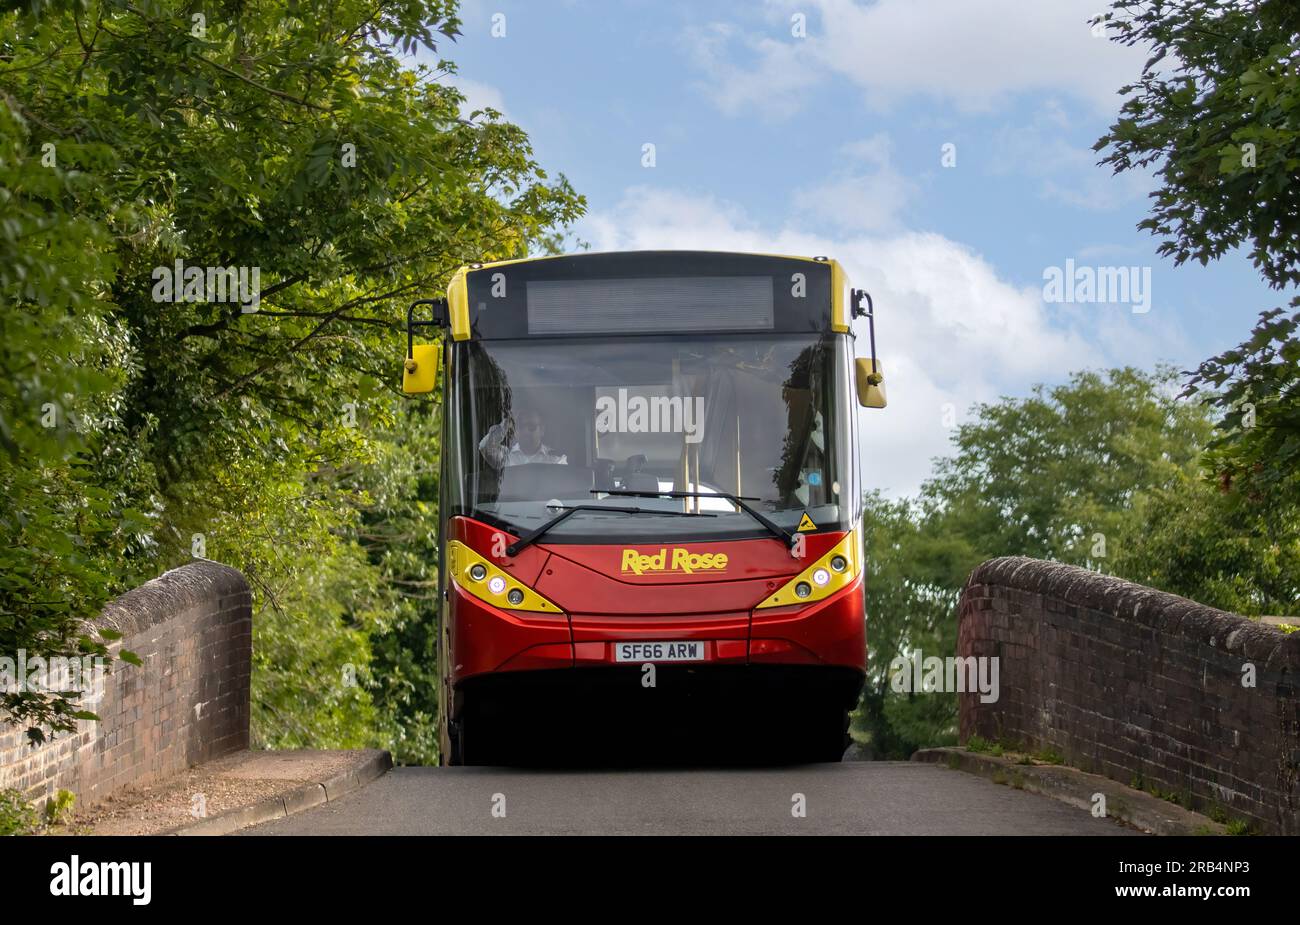 Milton Keynes,UK - July 6th 2023: 2016 ALEXANDER DENNIS coach for Red Rose local bus service on a rural narrow bridge Stock Photo